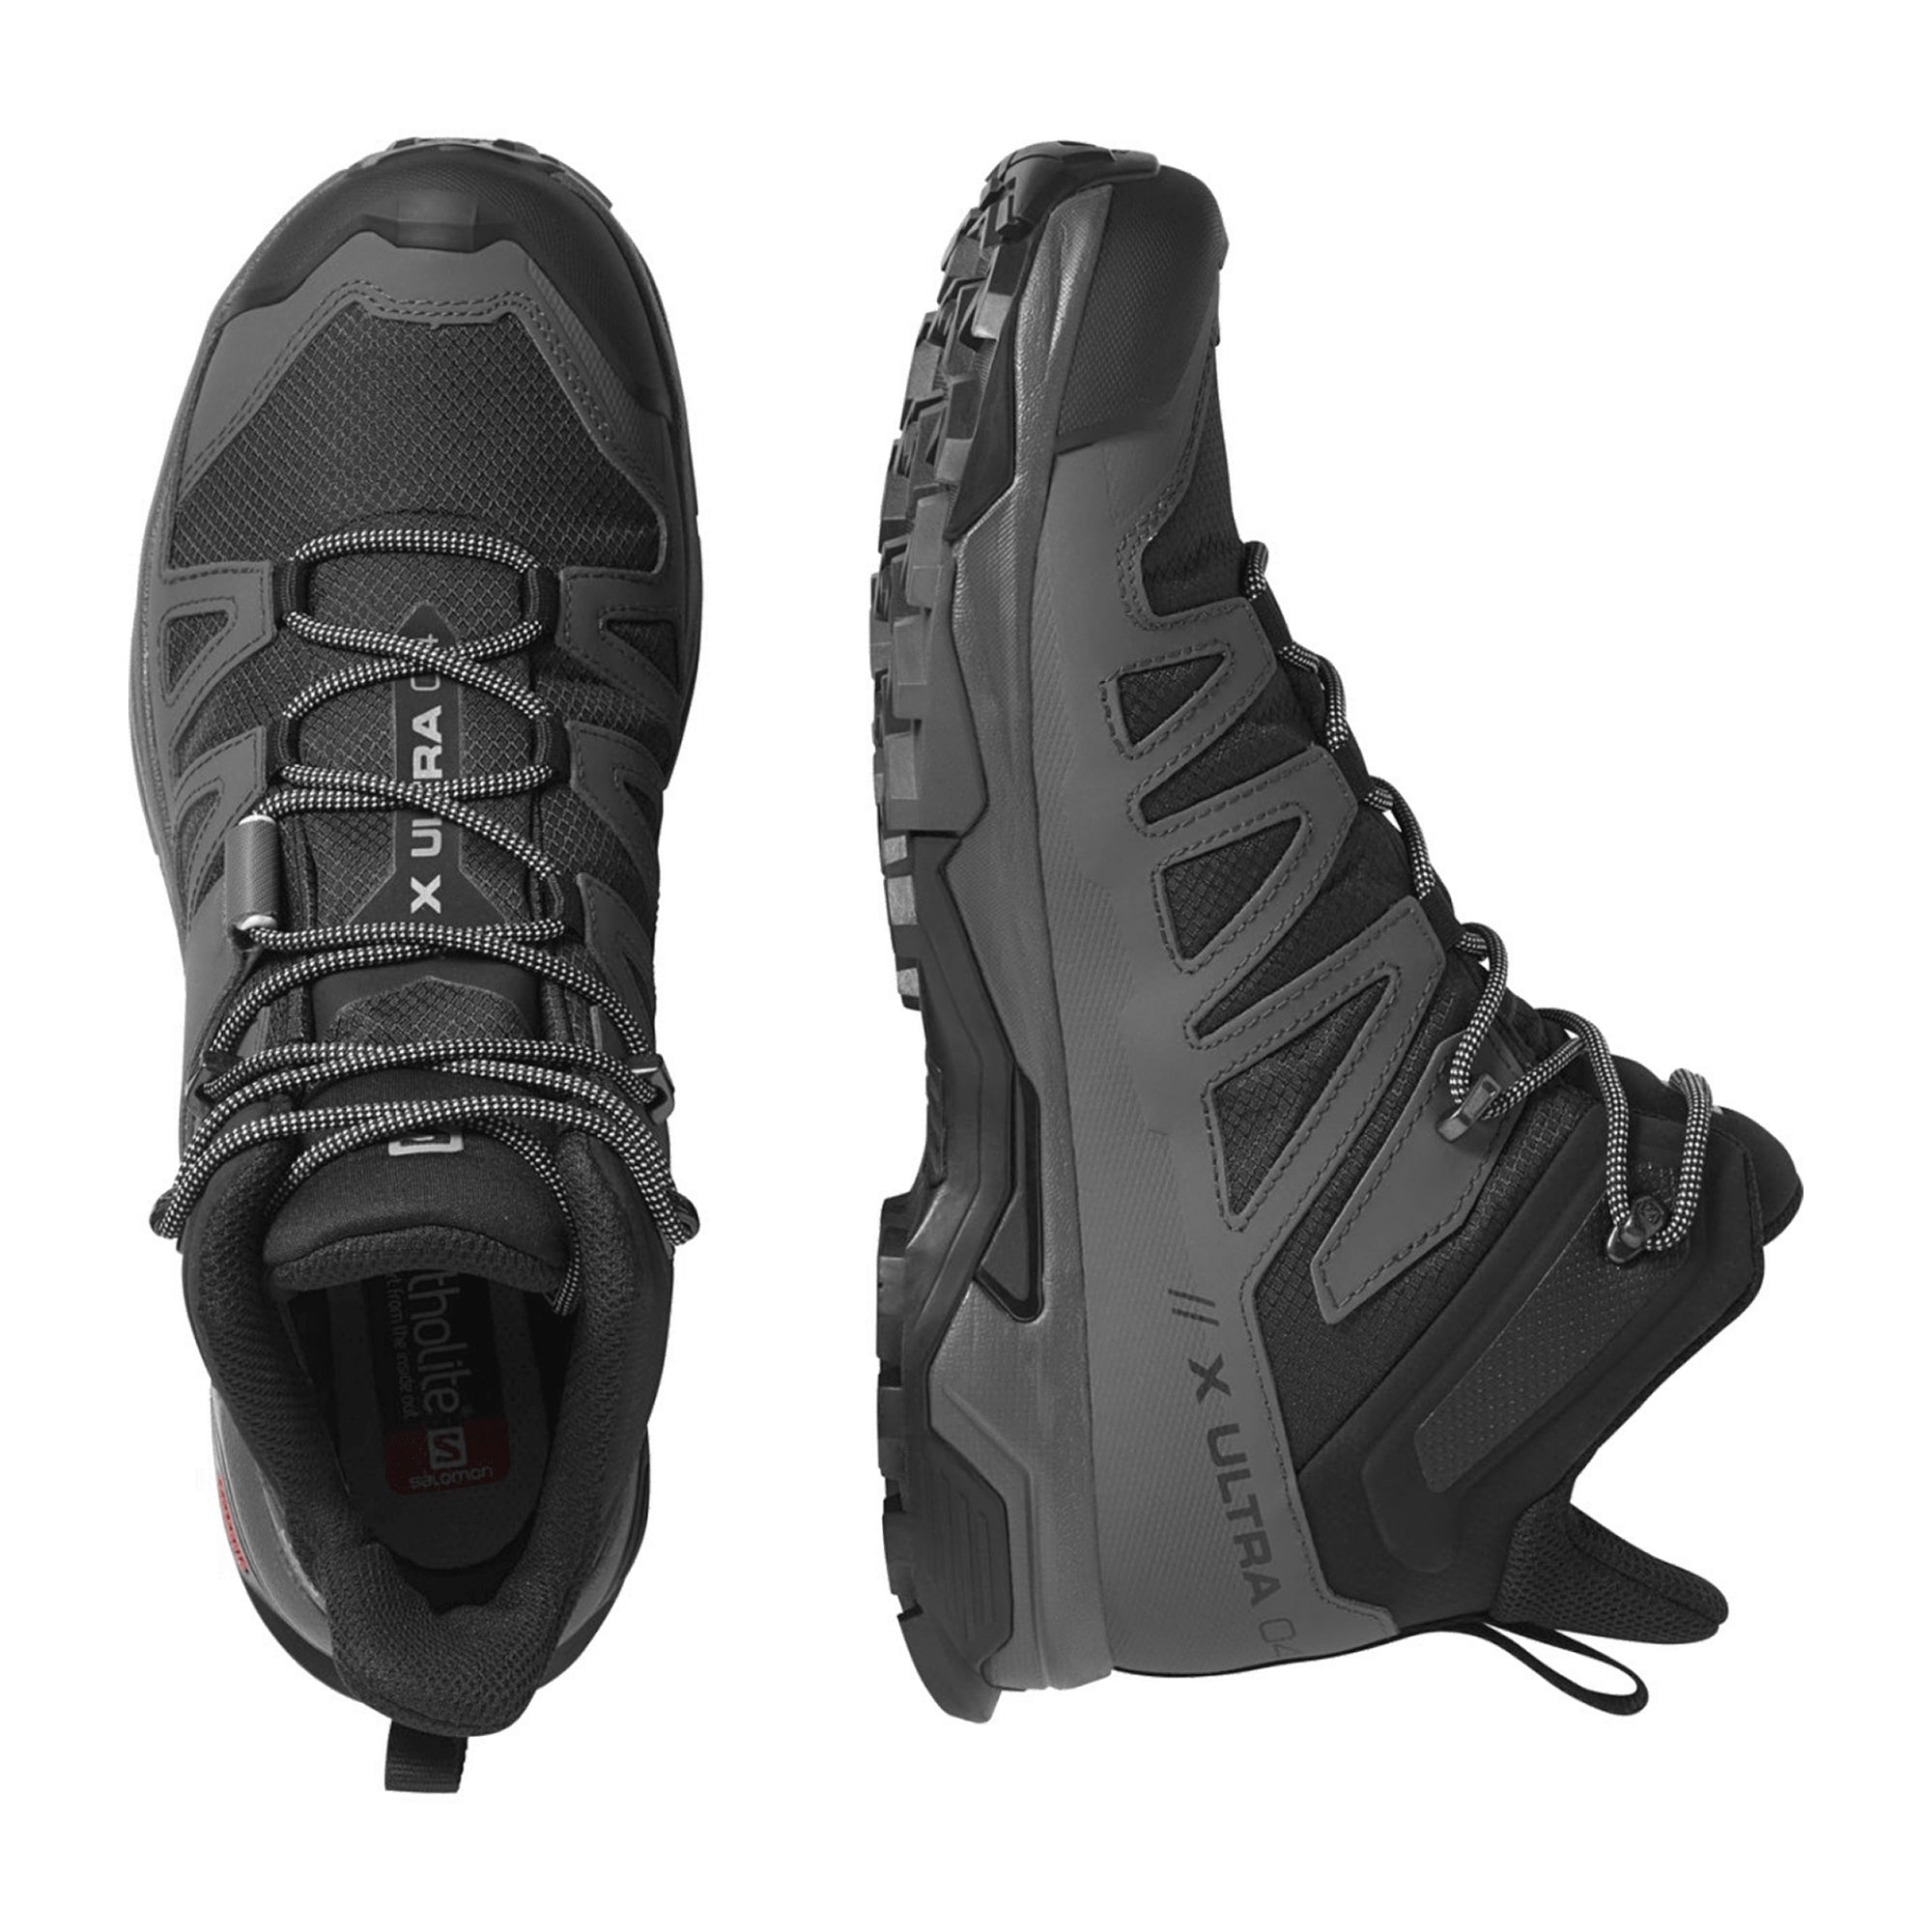 Salomon X ULTRA 4 MID GTX for men, black, shoes